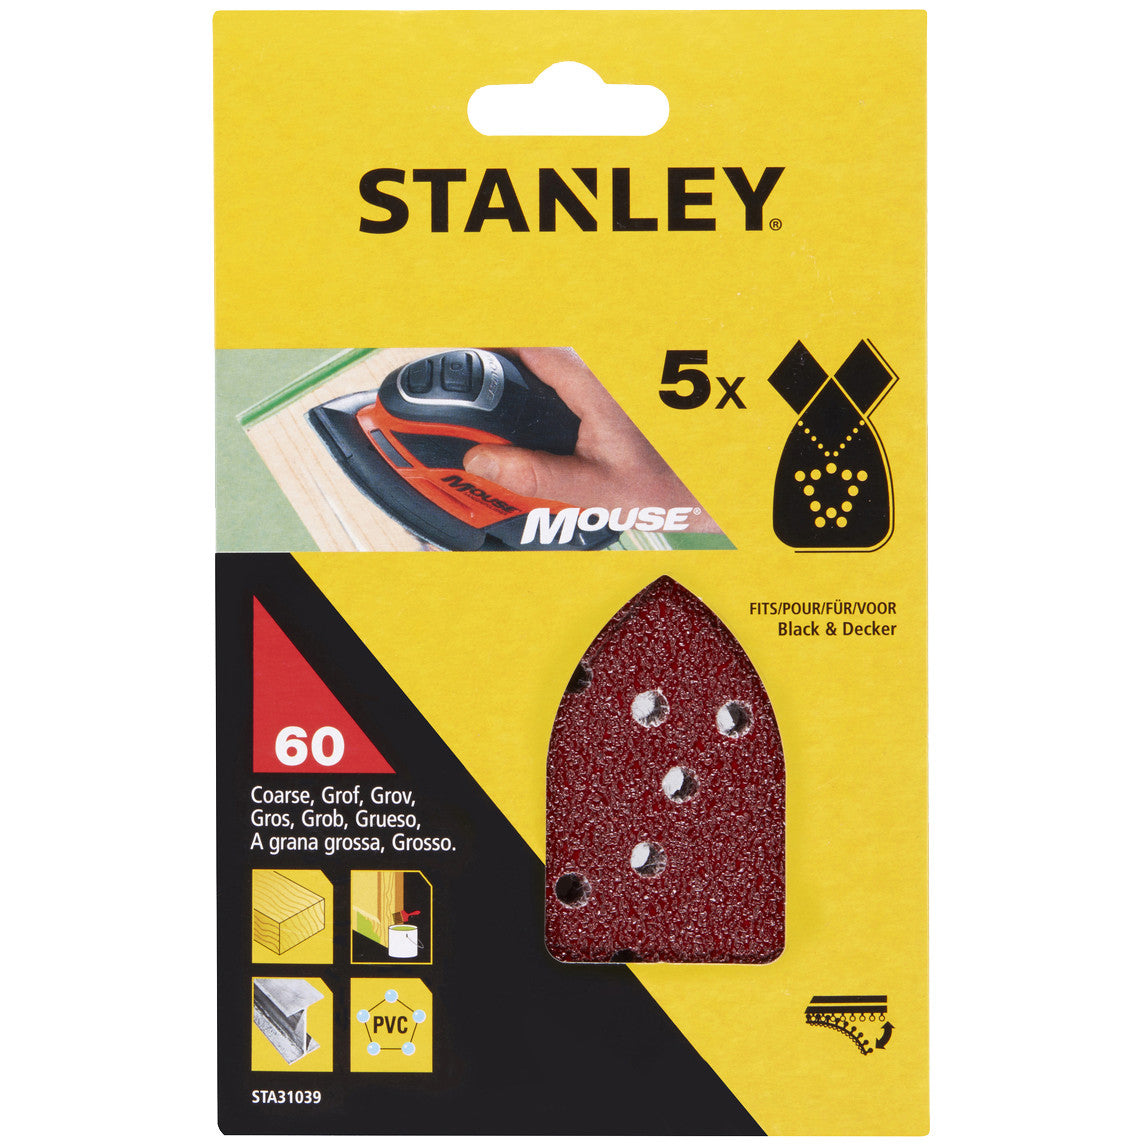 Piranha/stanley sta31039 (x31039) 5 fogli velcro x mouse gr.60